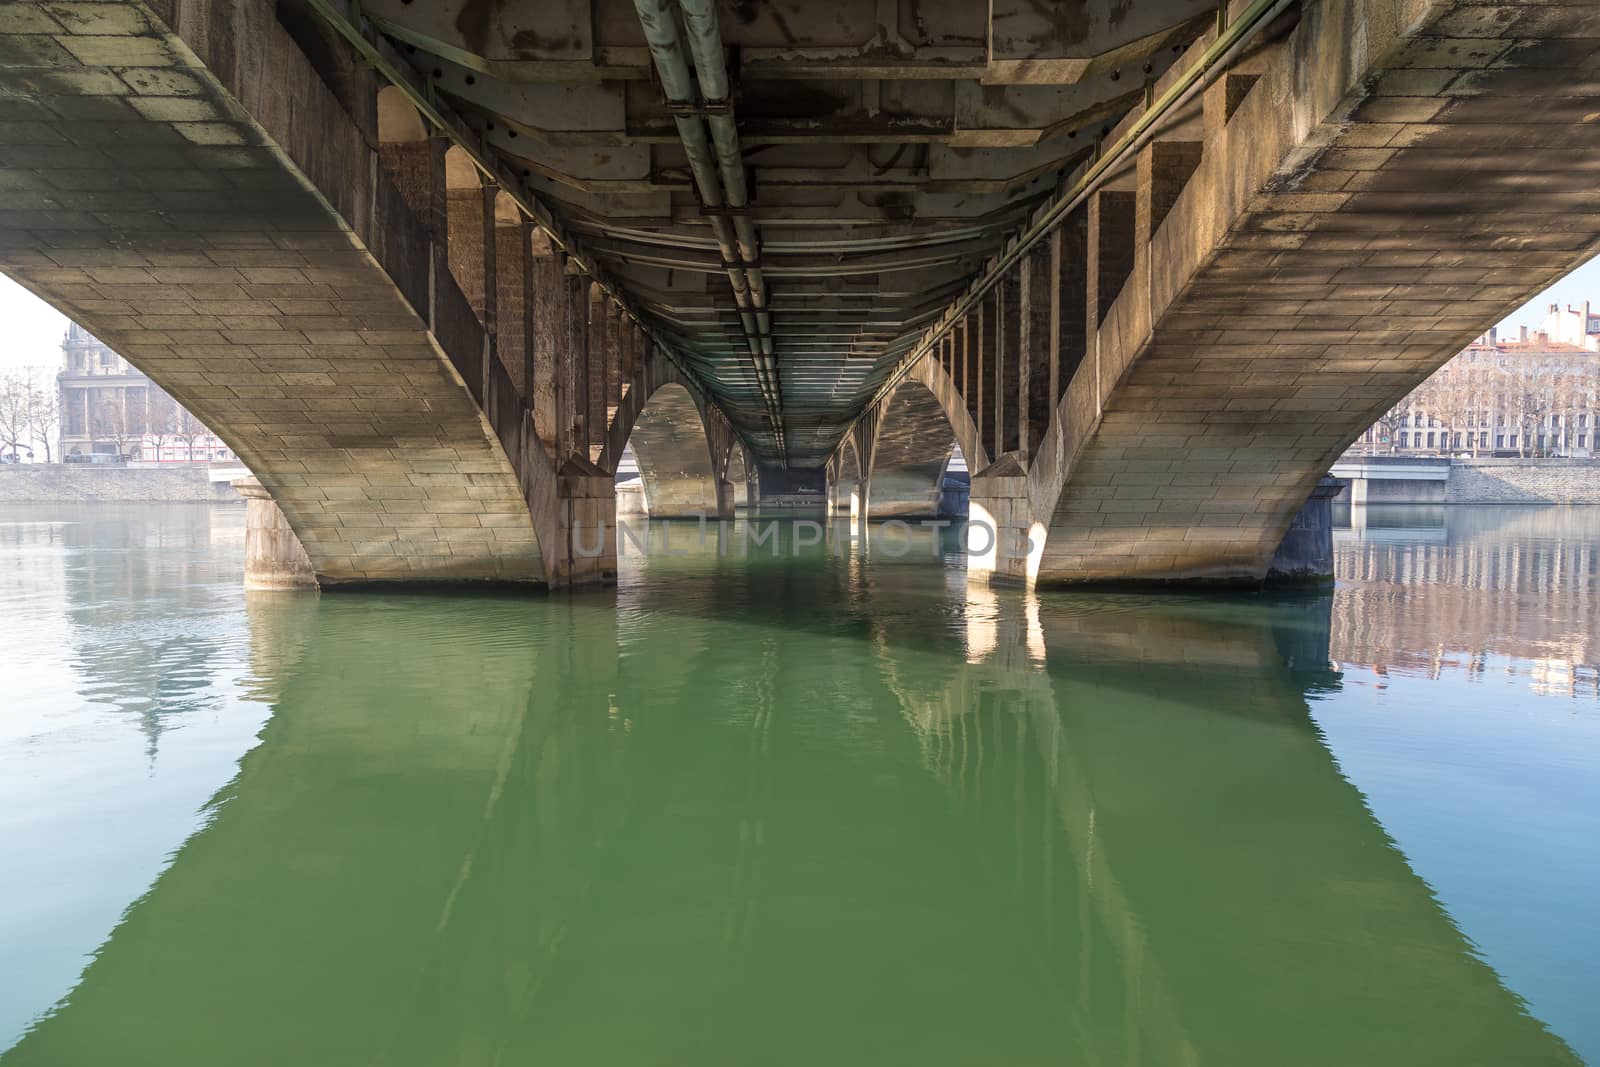 View under a bridge over a river